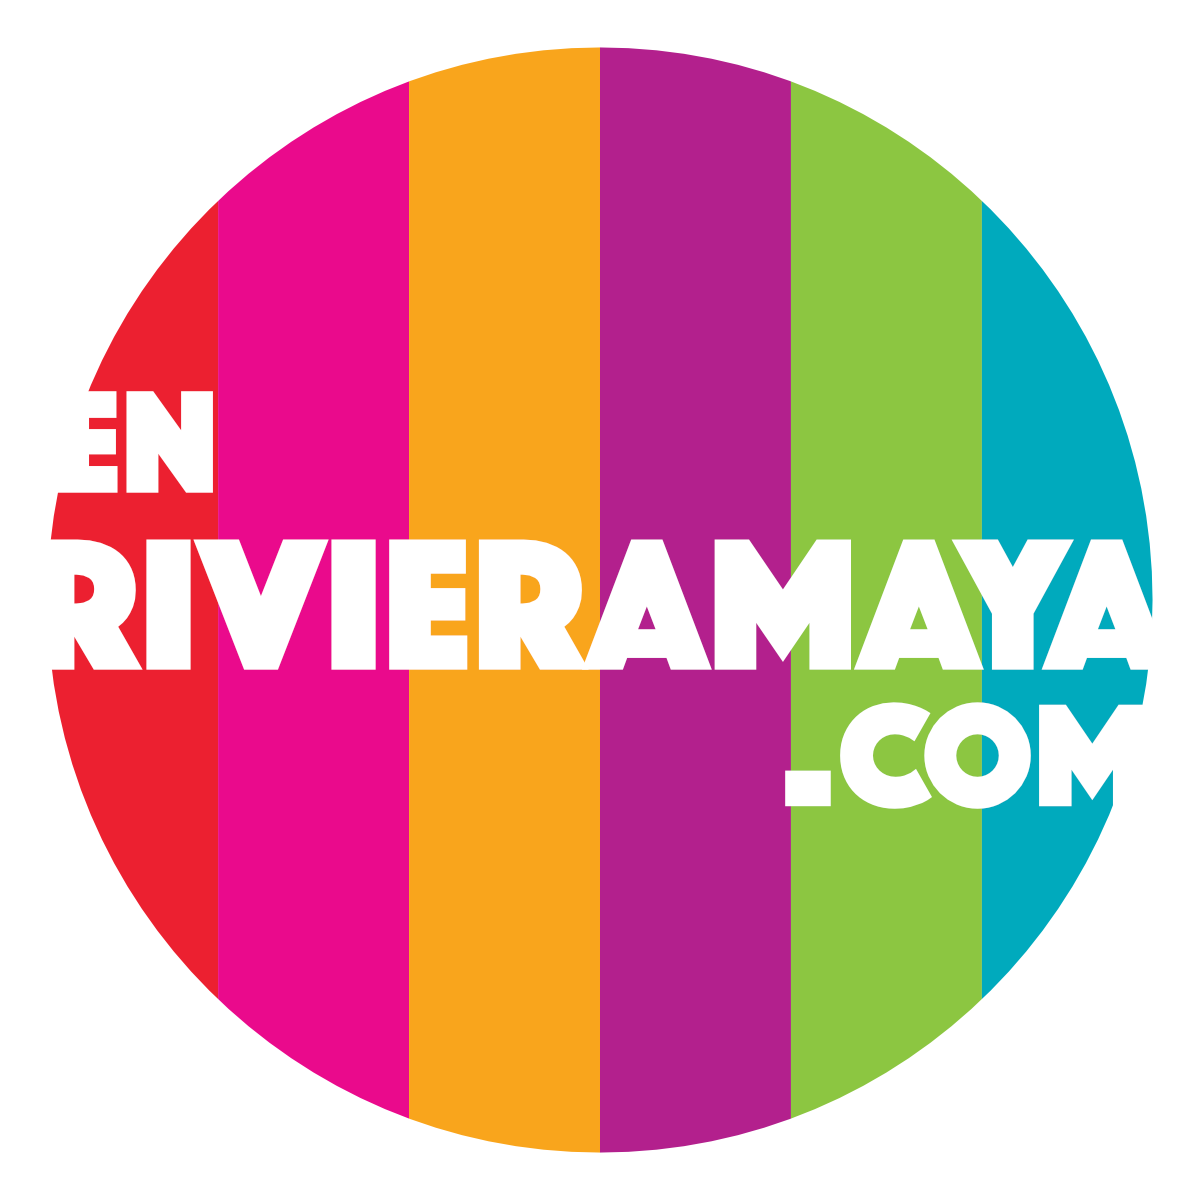 (c) Enrivieramaya.com